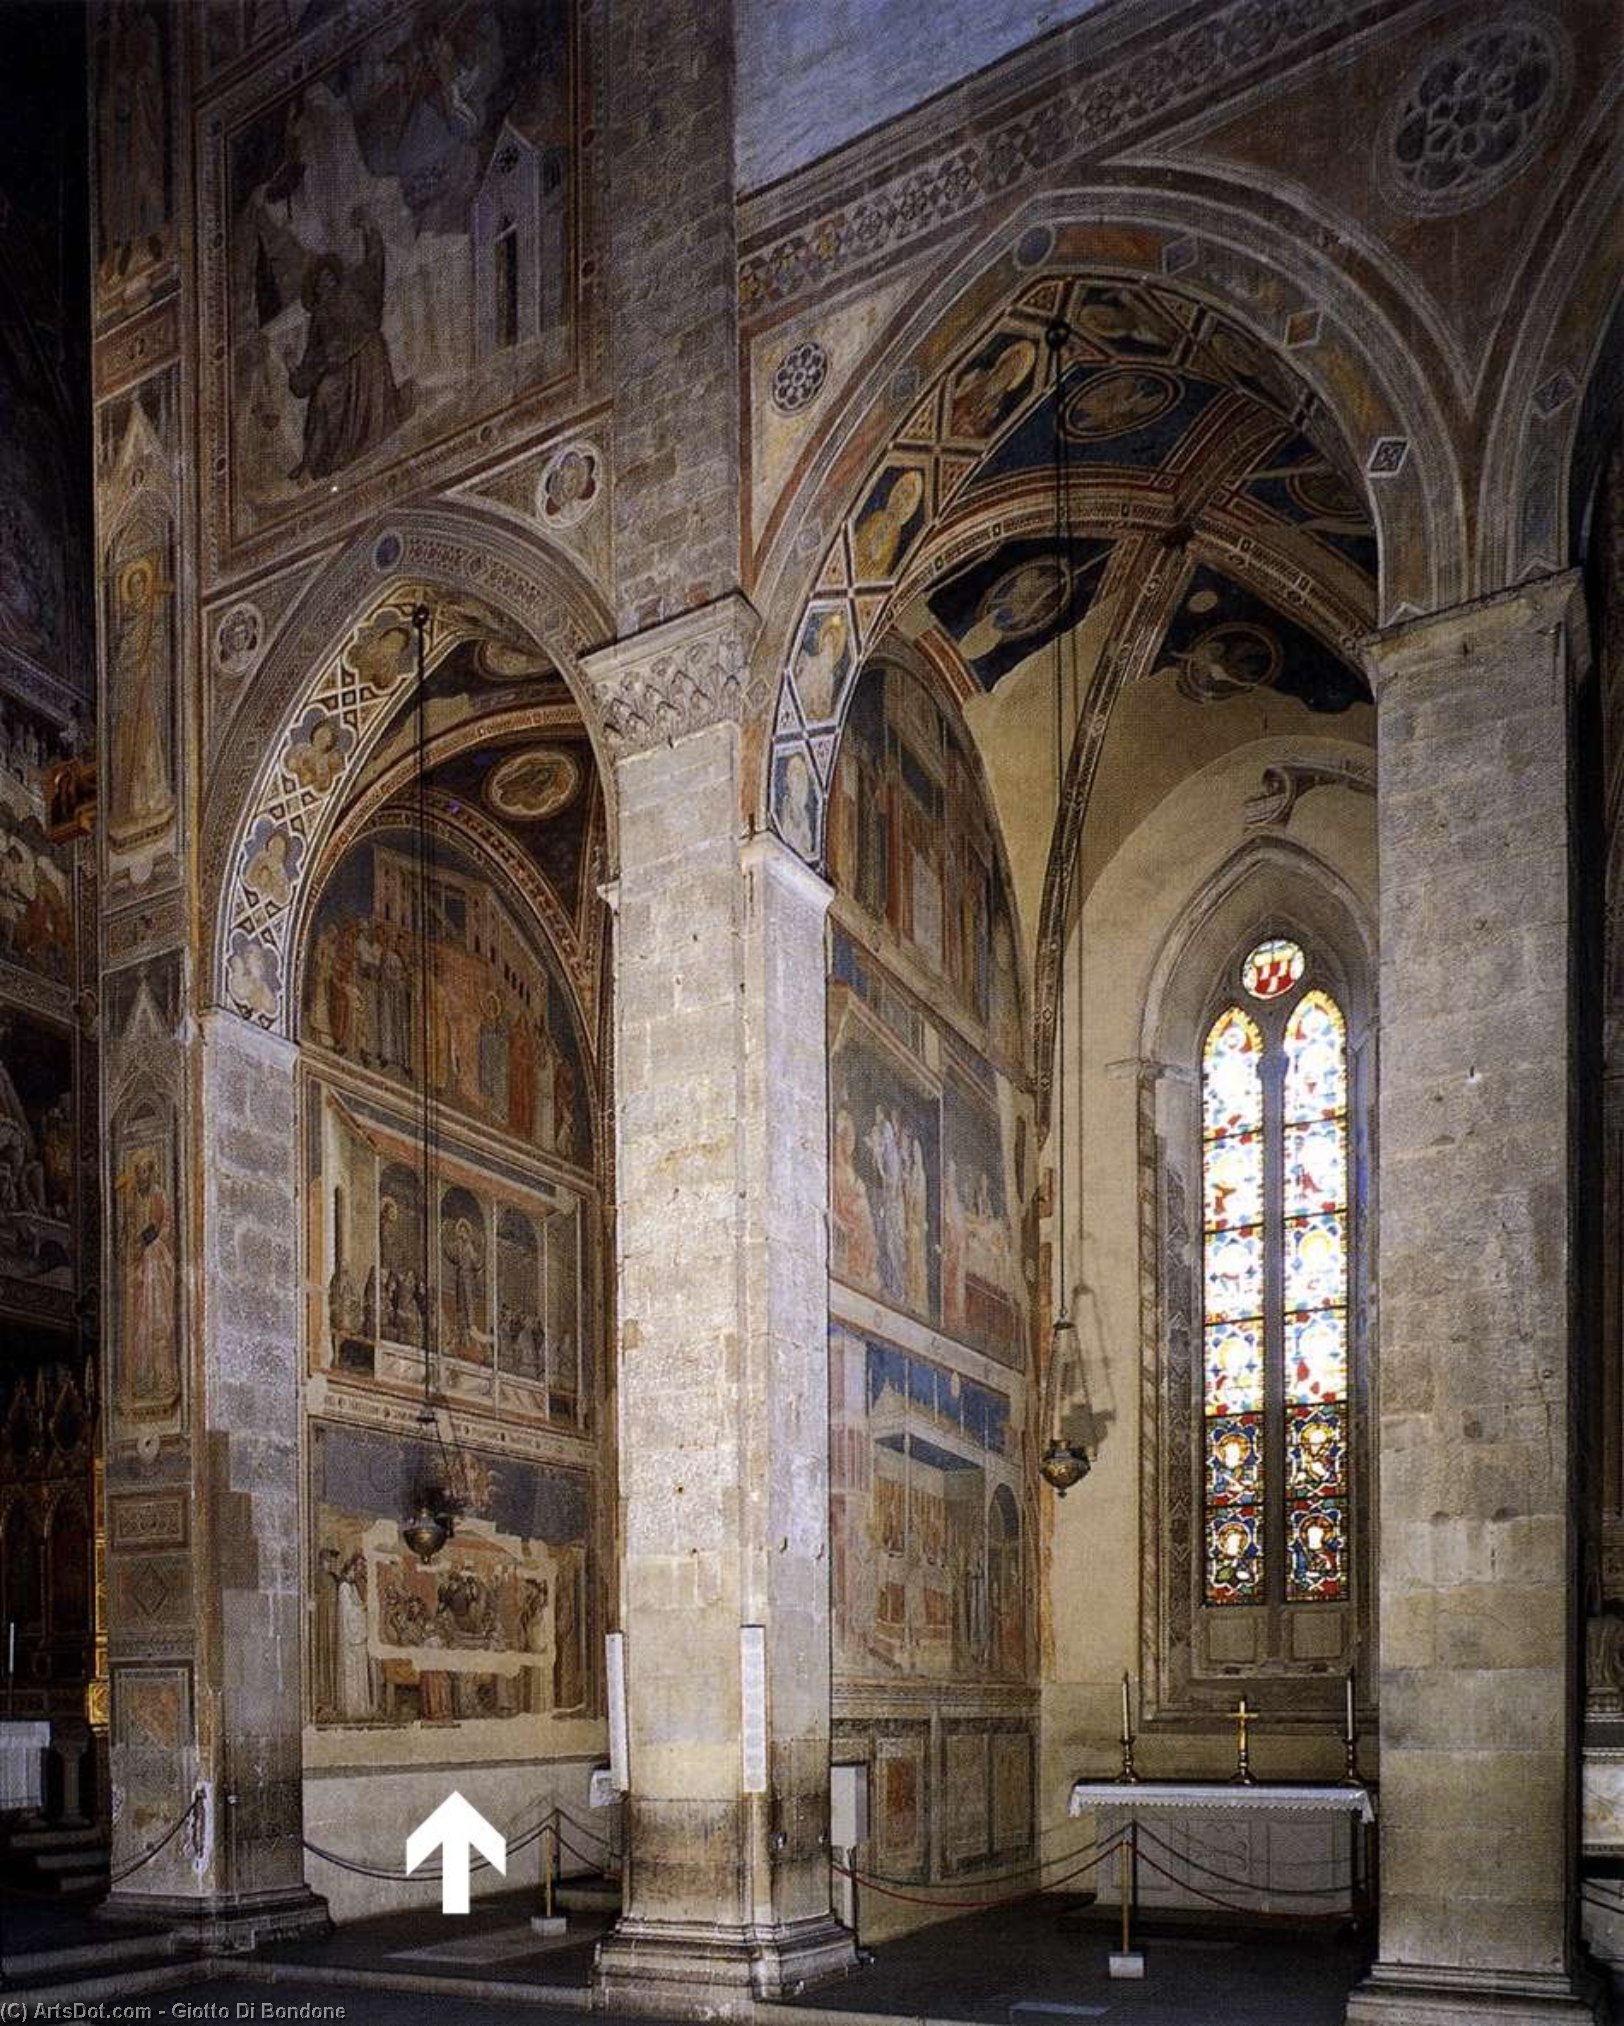 Acheter Reproductions D'art De Musée Vue des chapelles Pérouzzi et Bardi (de droite) de Giotto Di Bondone (1267-1337, Italy) | ArtsDot.com